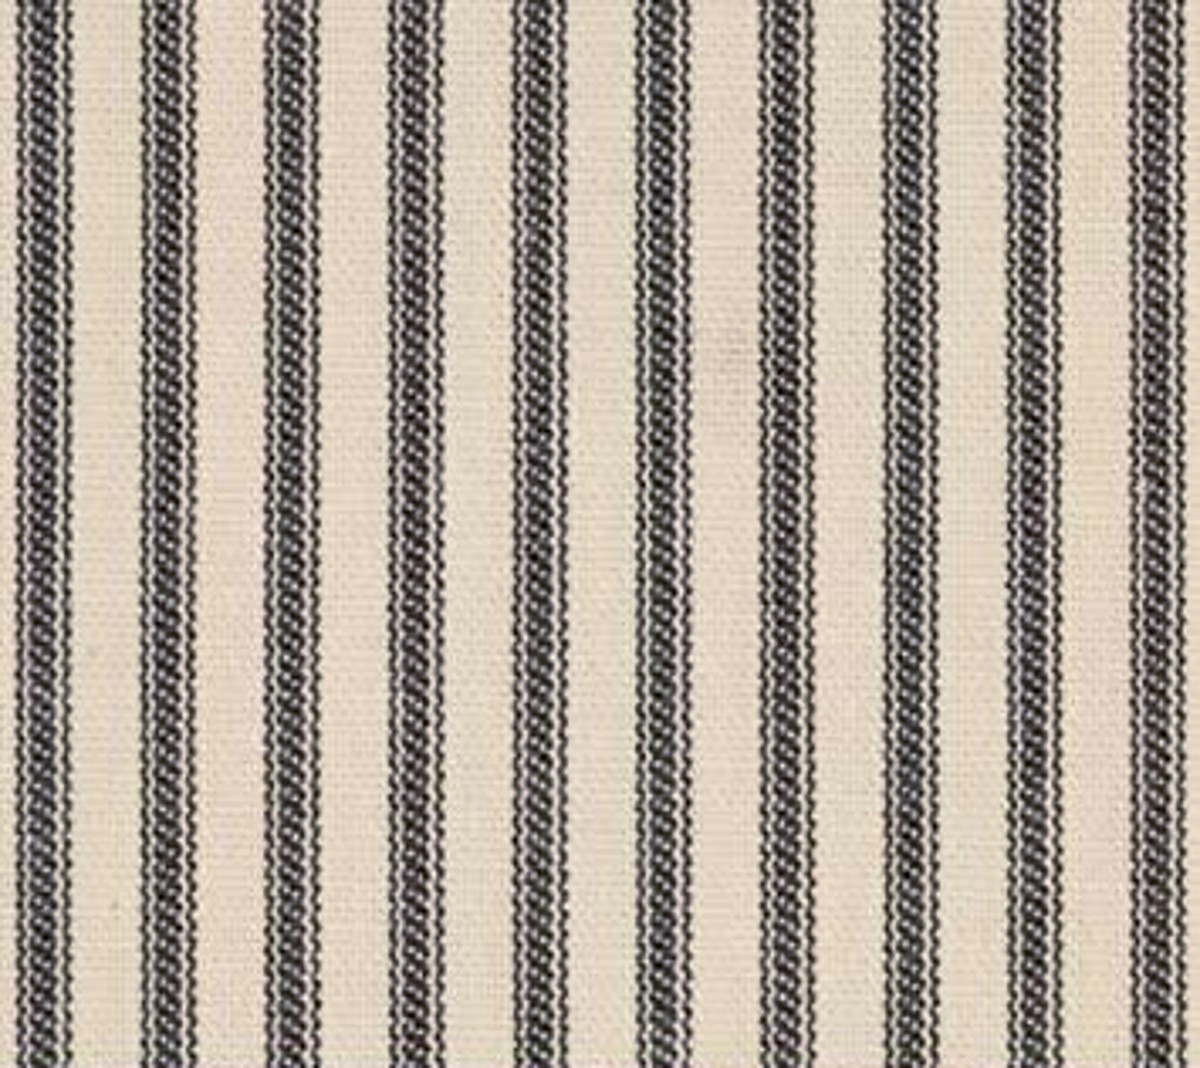 54" Black Stripe Ticking Fabric - Per Yard